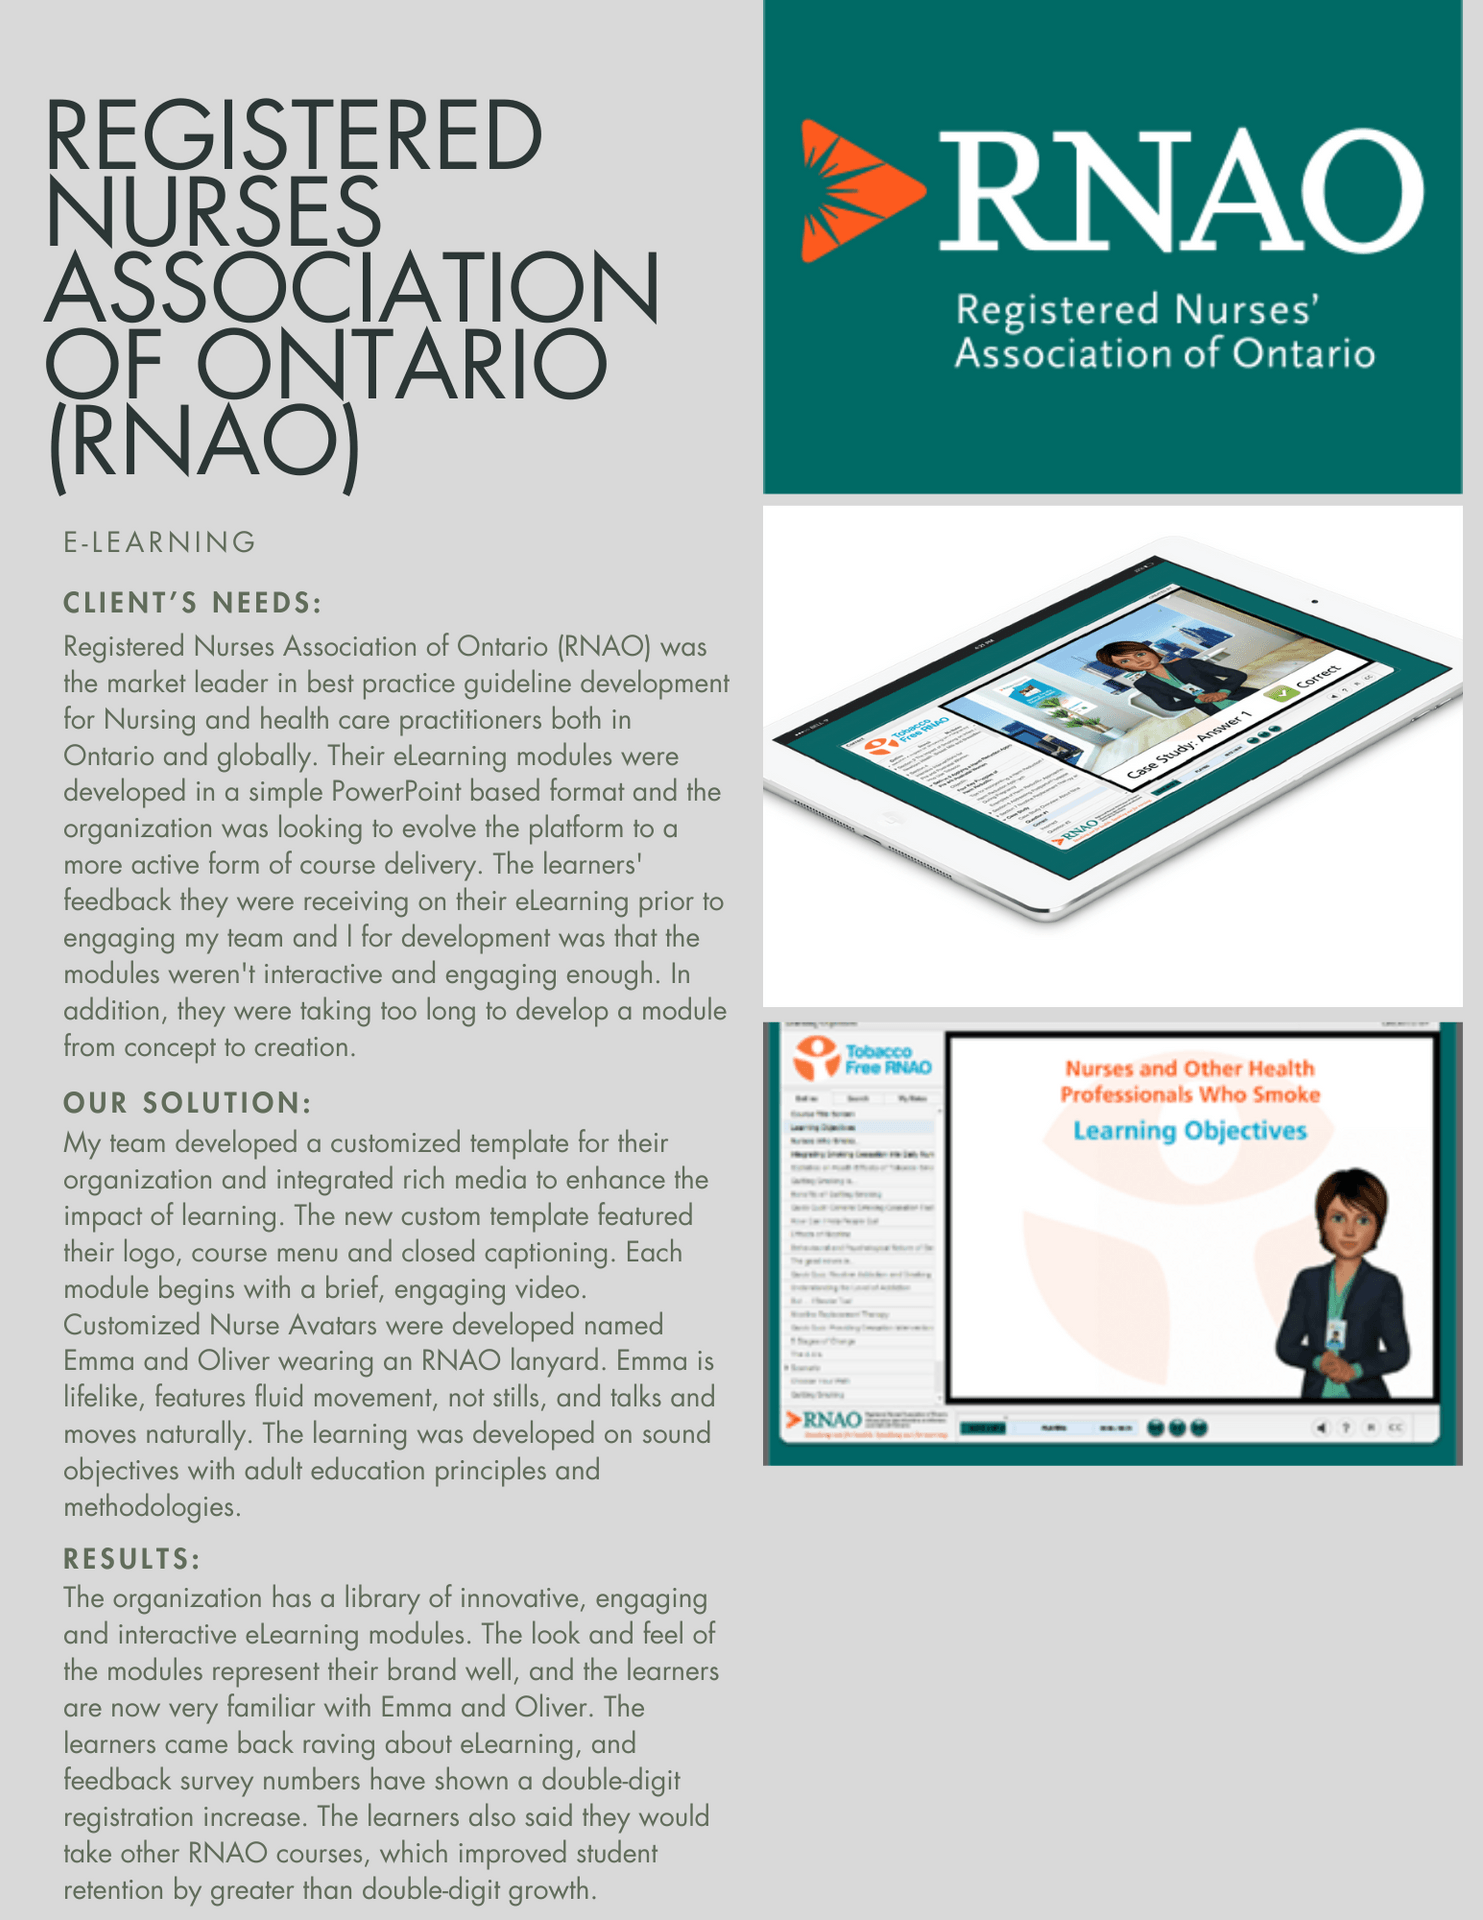 Registered Nurses Association of Ontario (RNAO)